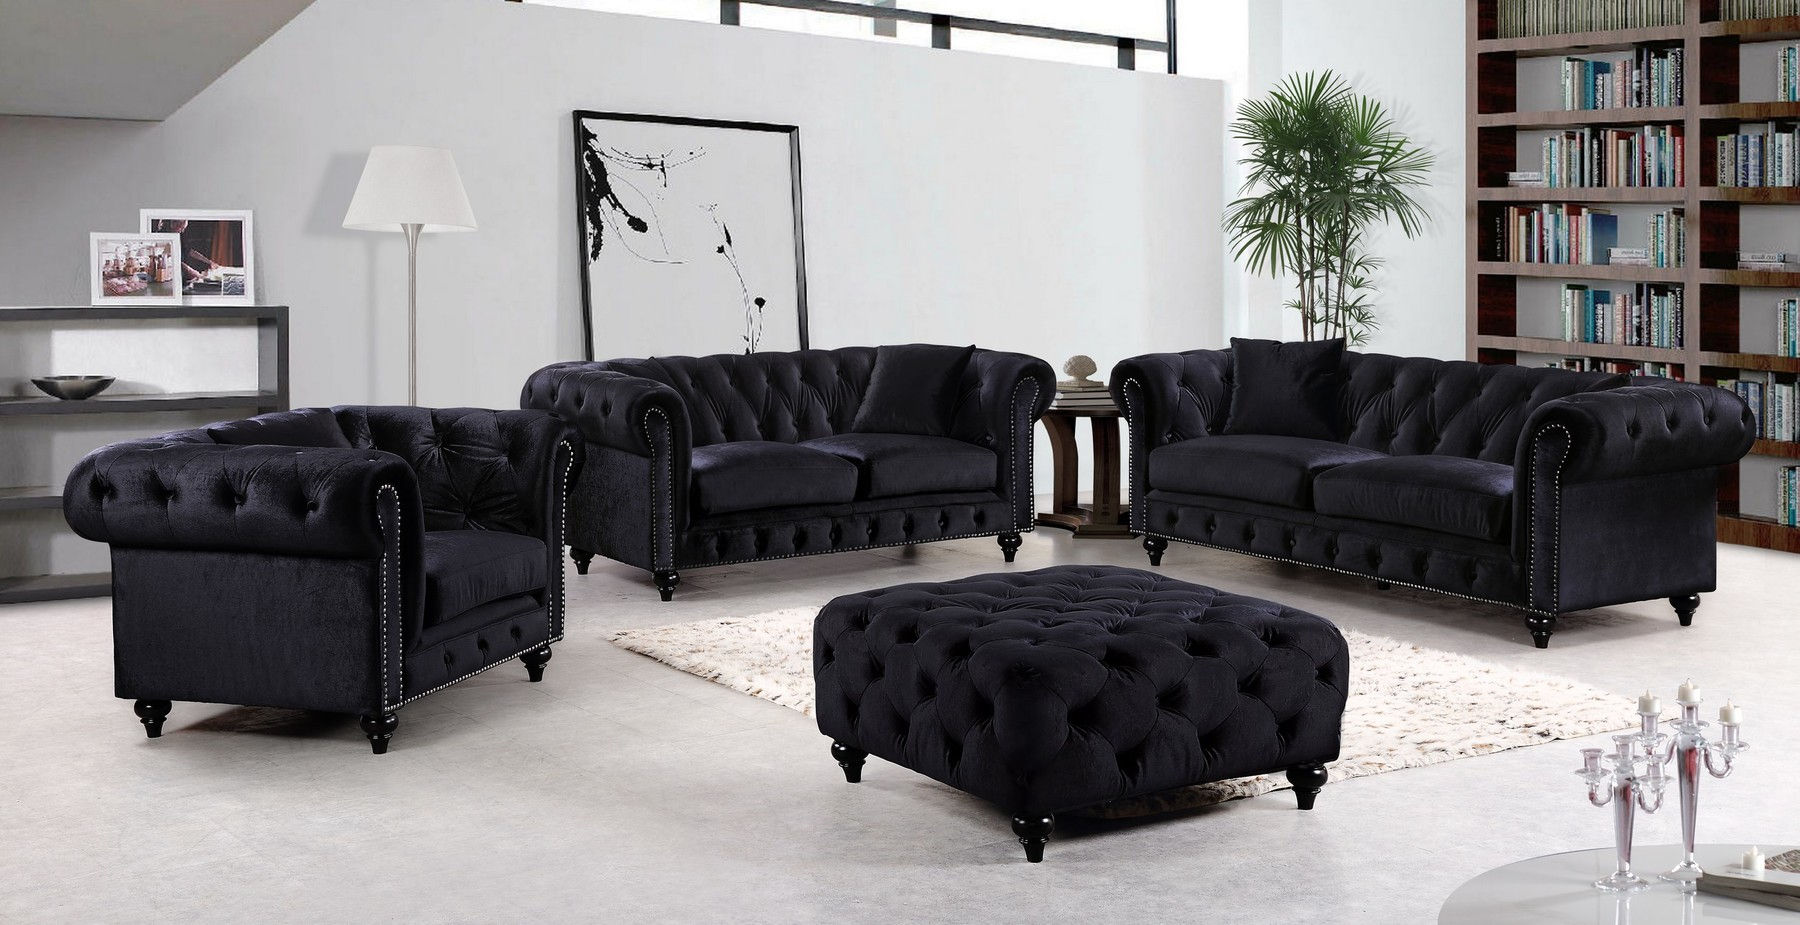 Chair Ottoman 662 Meridian Furniture, Black Living Room Sets